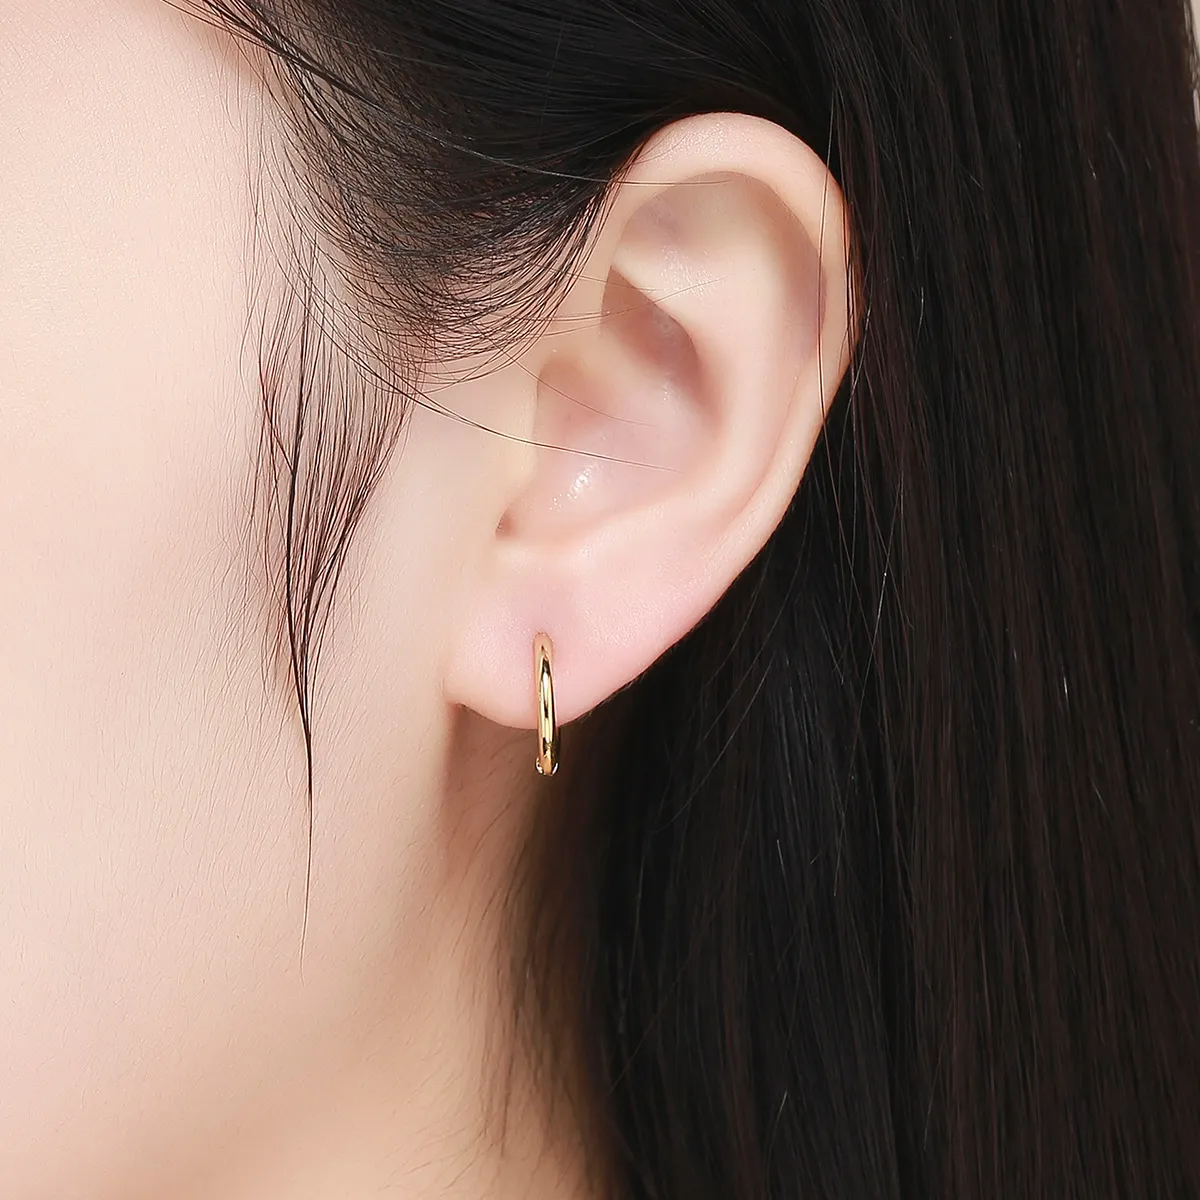 Pandora Style Gold-Plated Hoop Earrings - SCE558